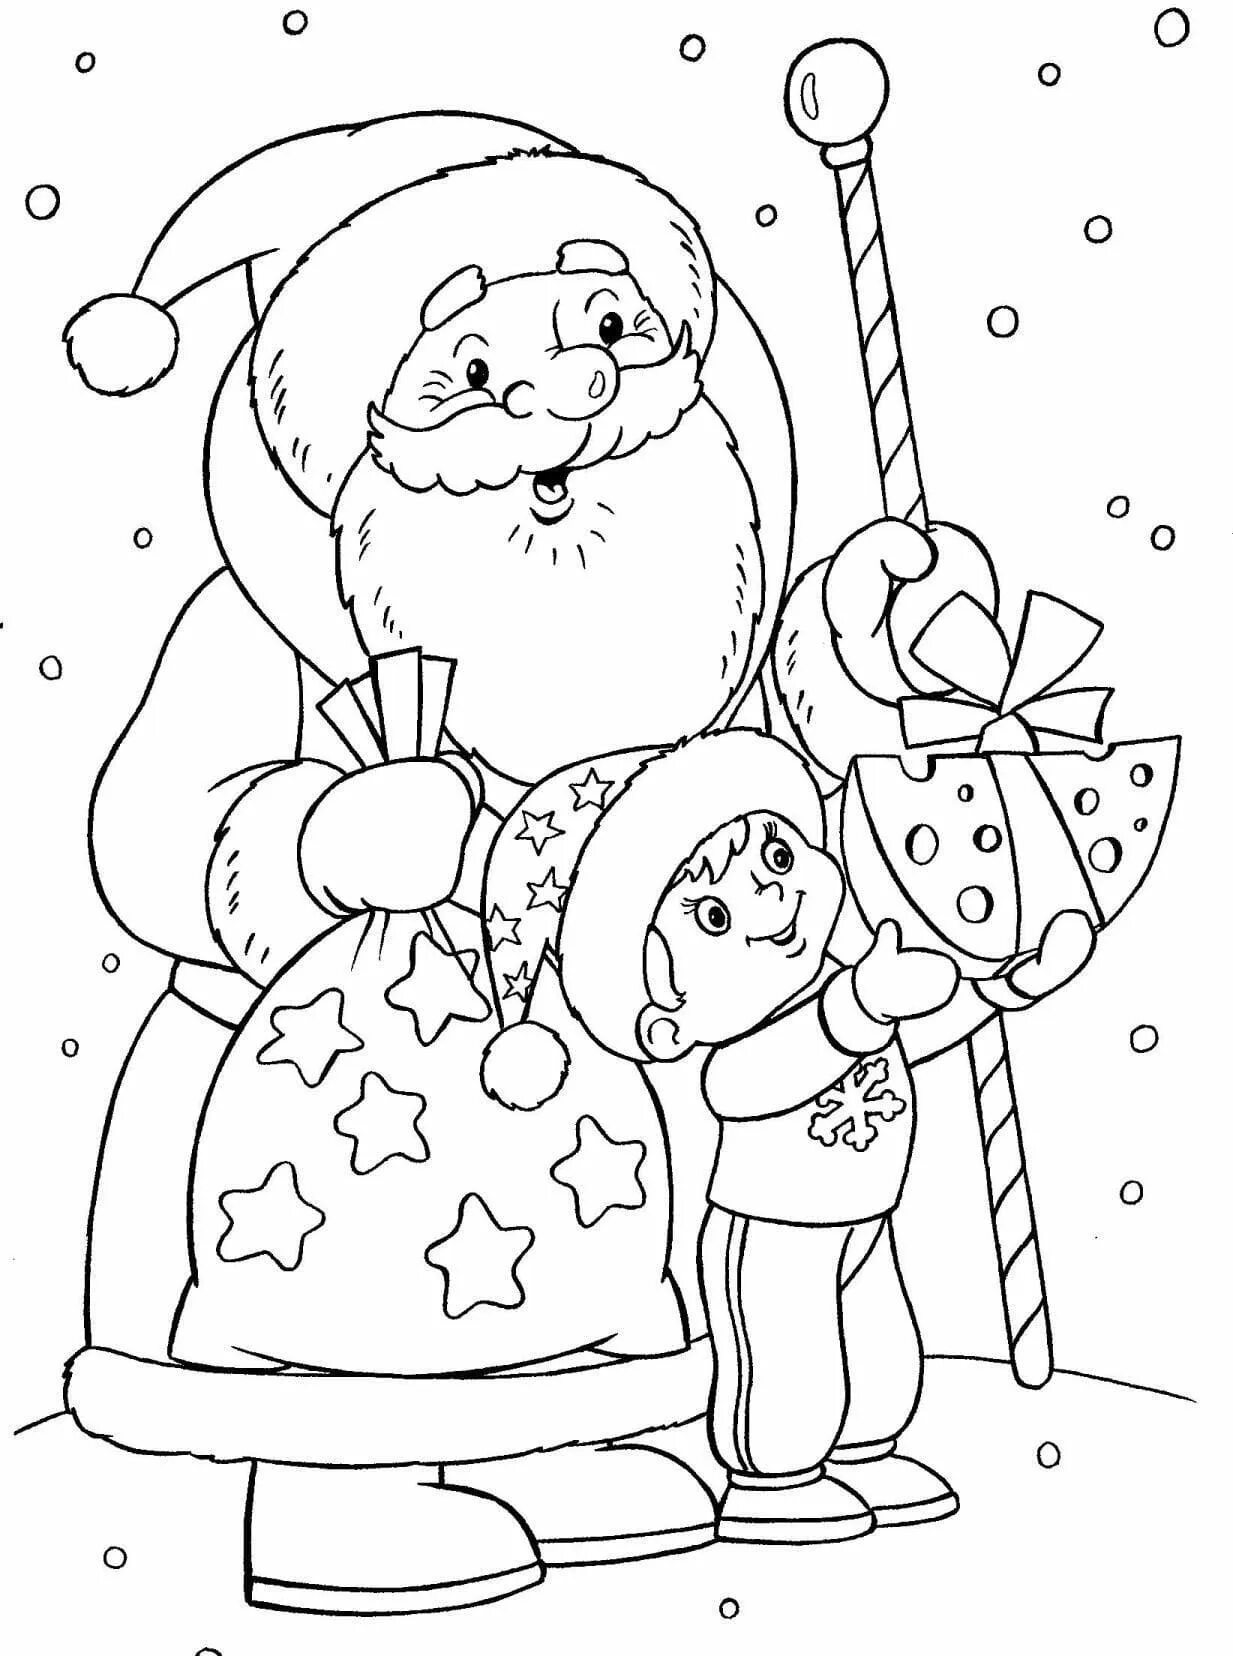 Inspiring children's Christmas drawing